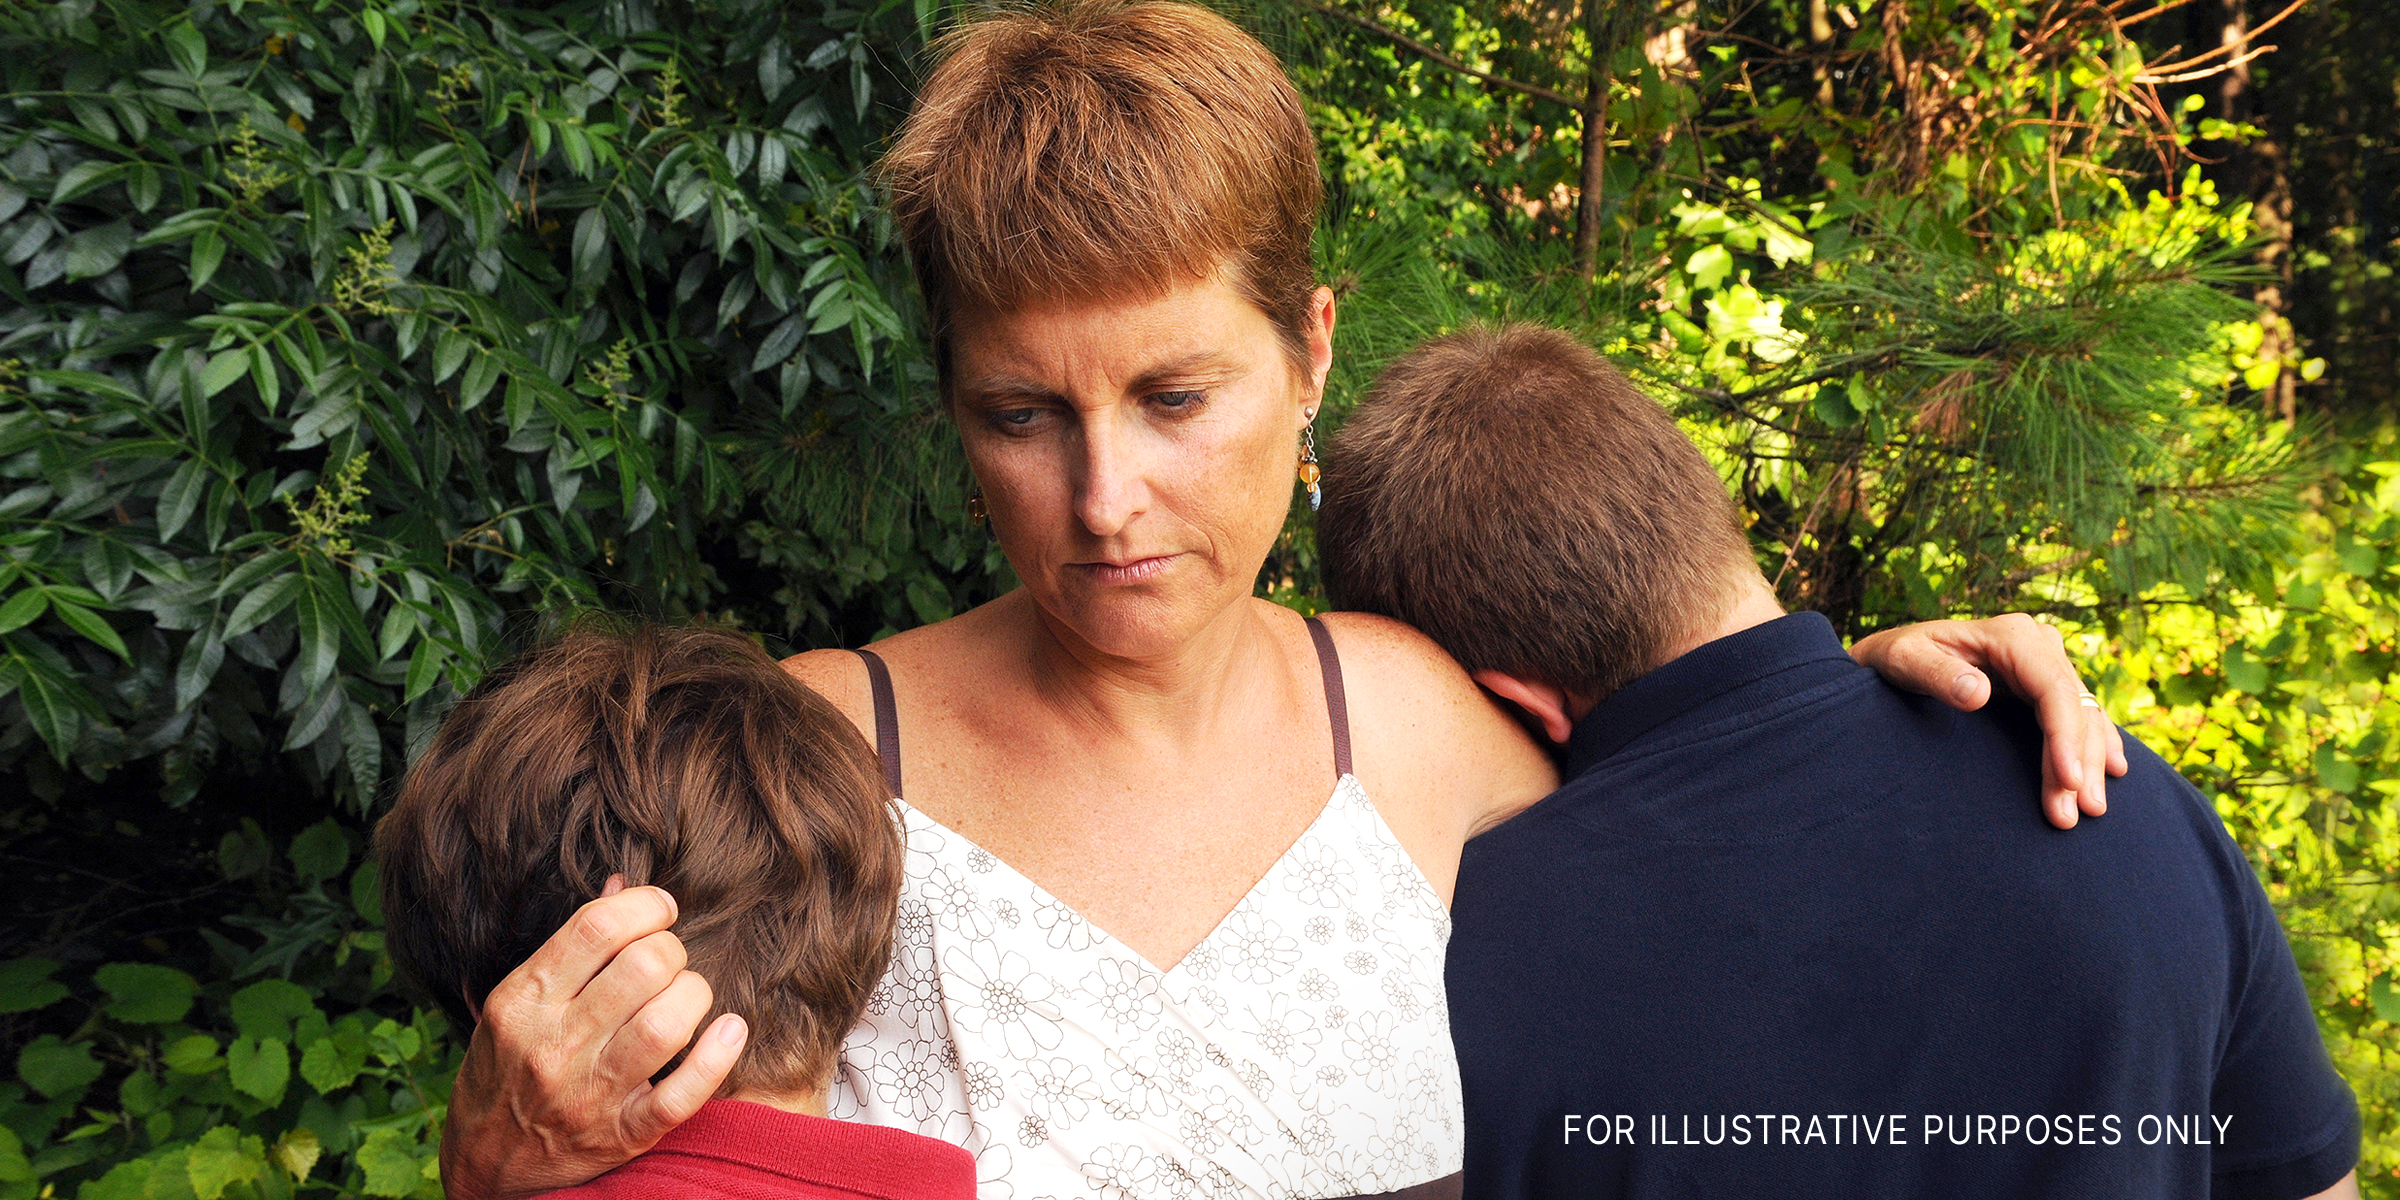 A woman hugging two children | Source: Shutterstock